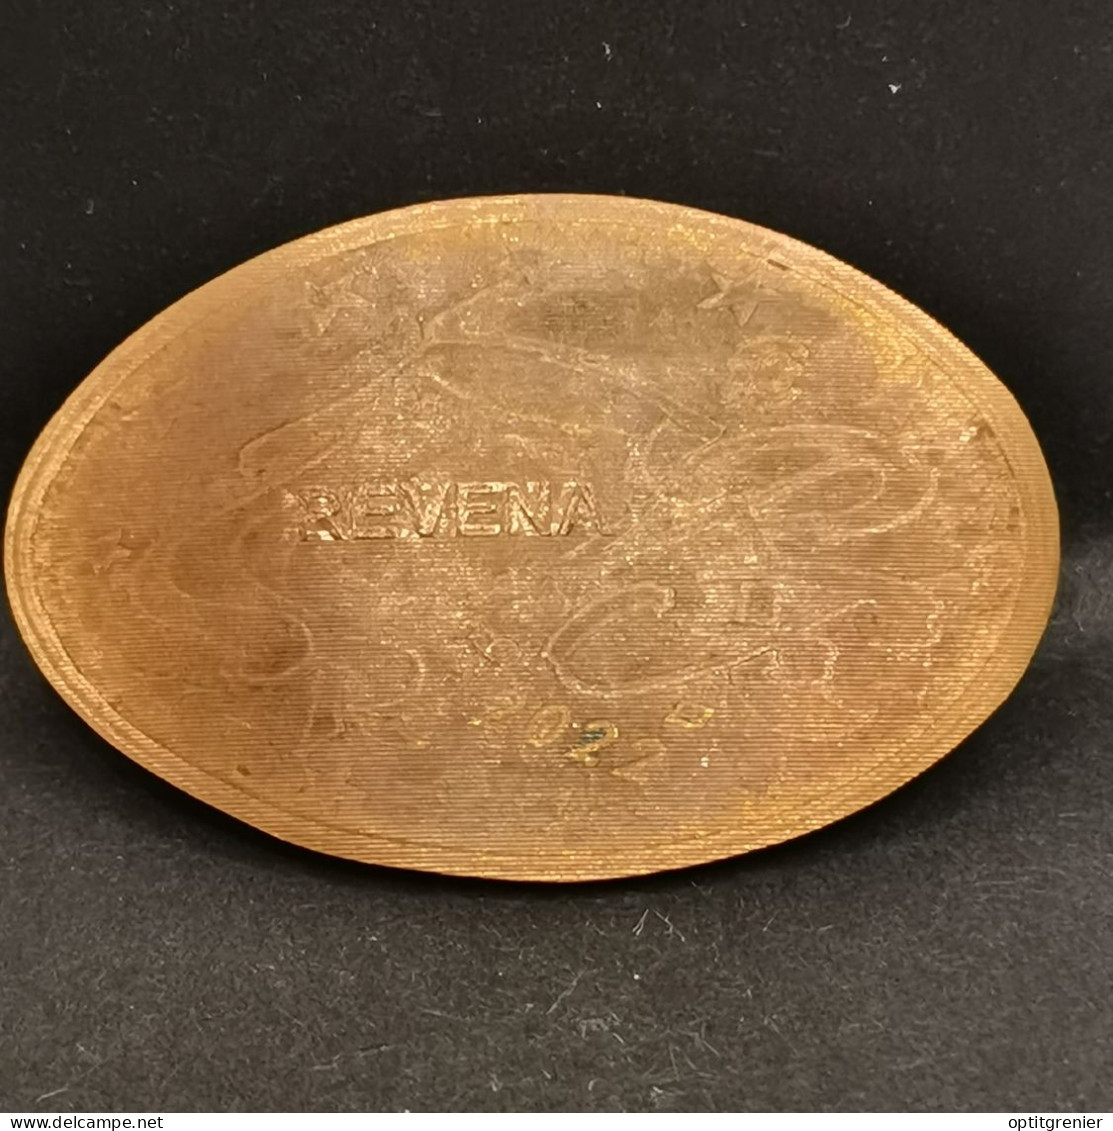 PIECE ECRASEE SEGOVIE COCHON ESPAGNE / SPAIN ELONGATED COIN - Souvenirmunten (elongated Coins)